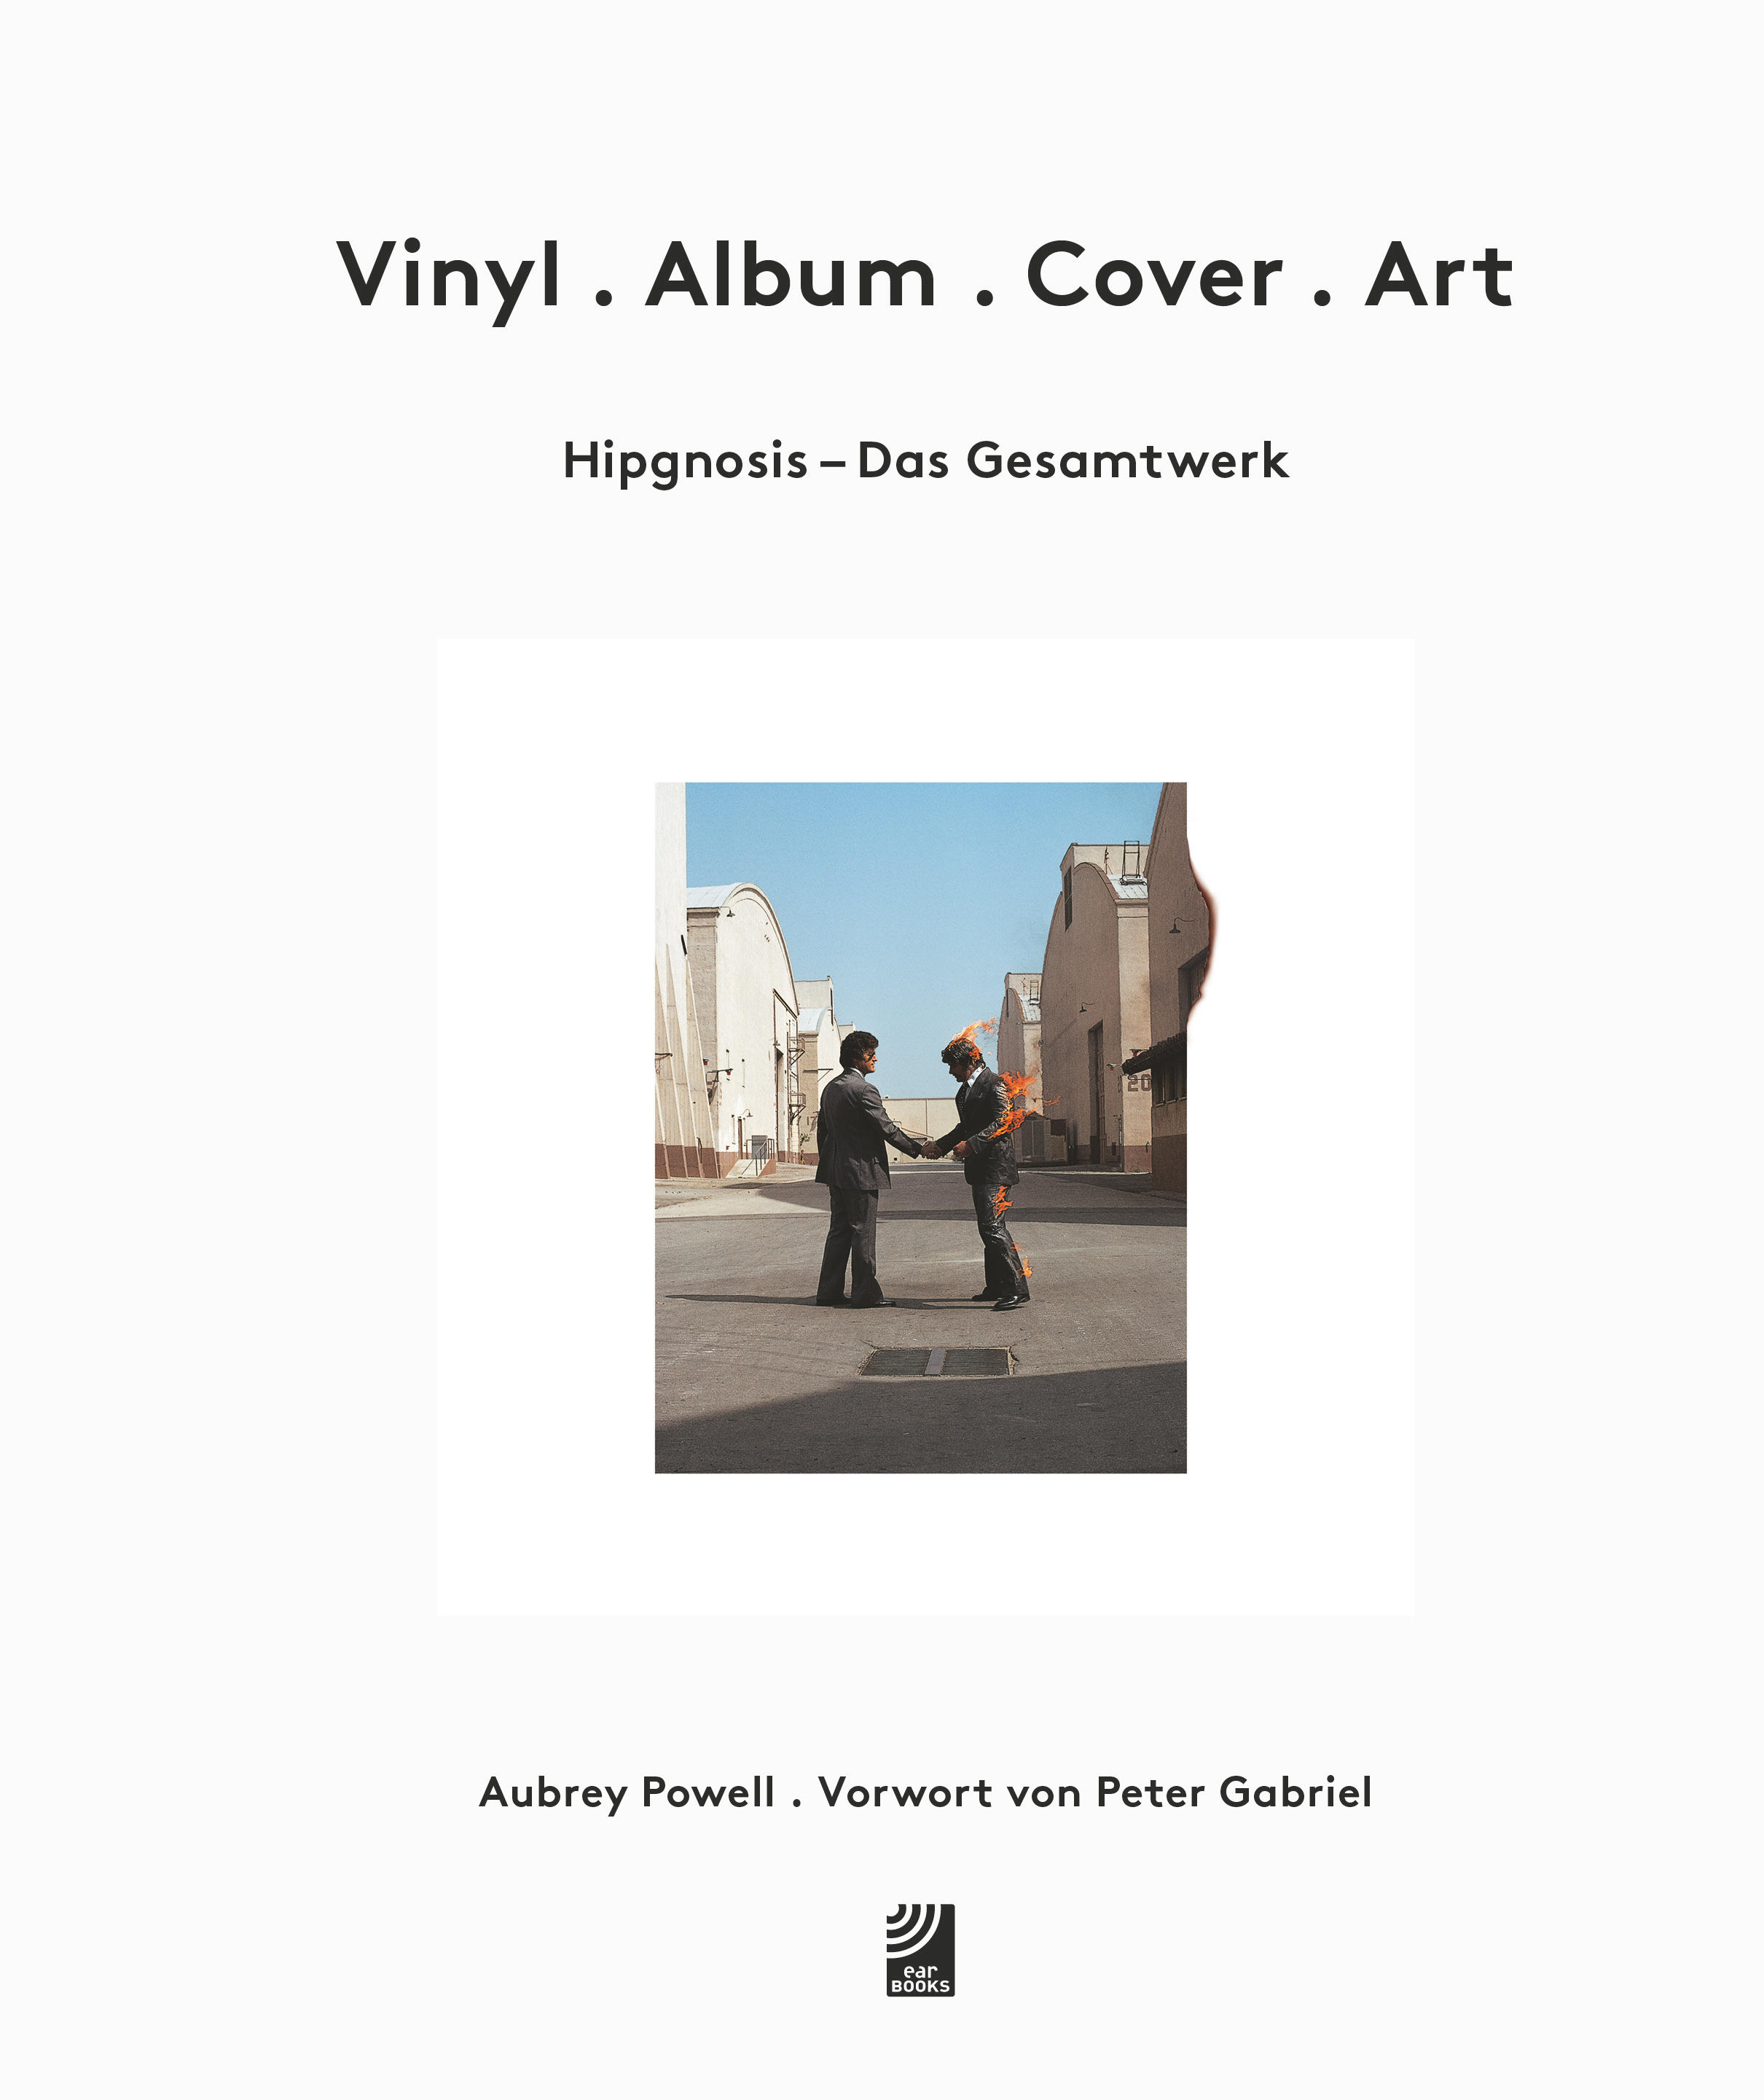 Hipgnosis Album Art-Das Vinyl Cover Gesamtwerk